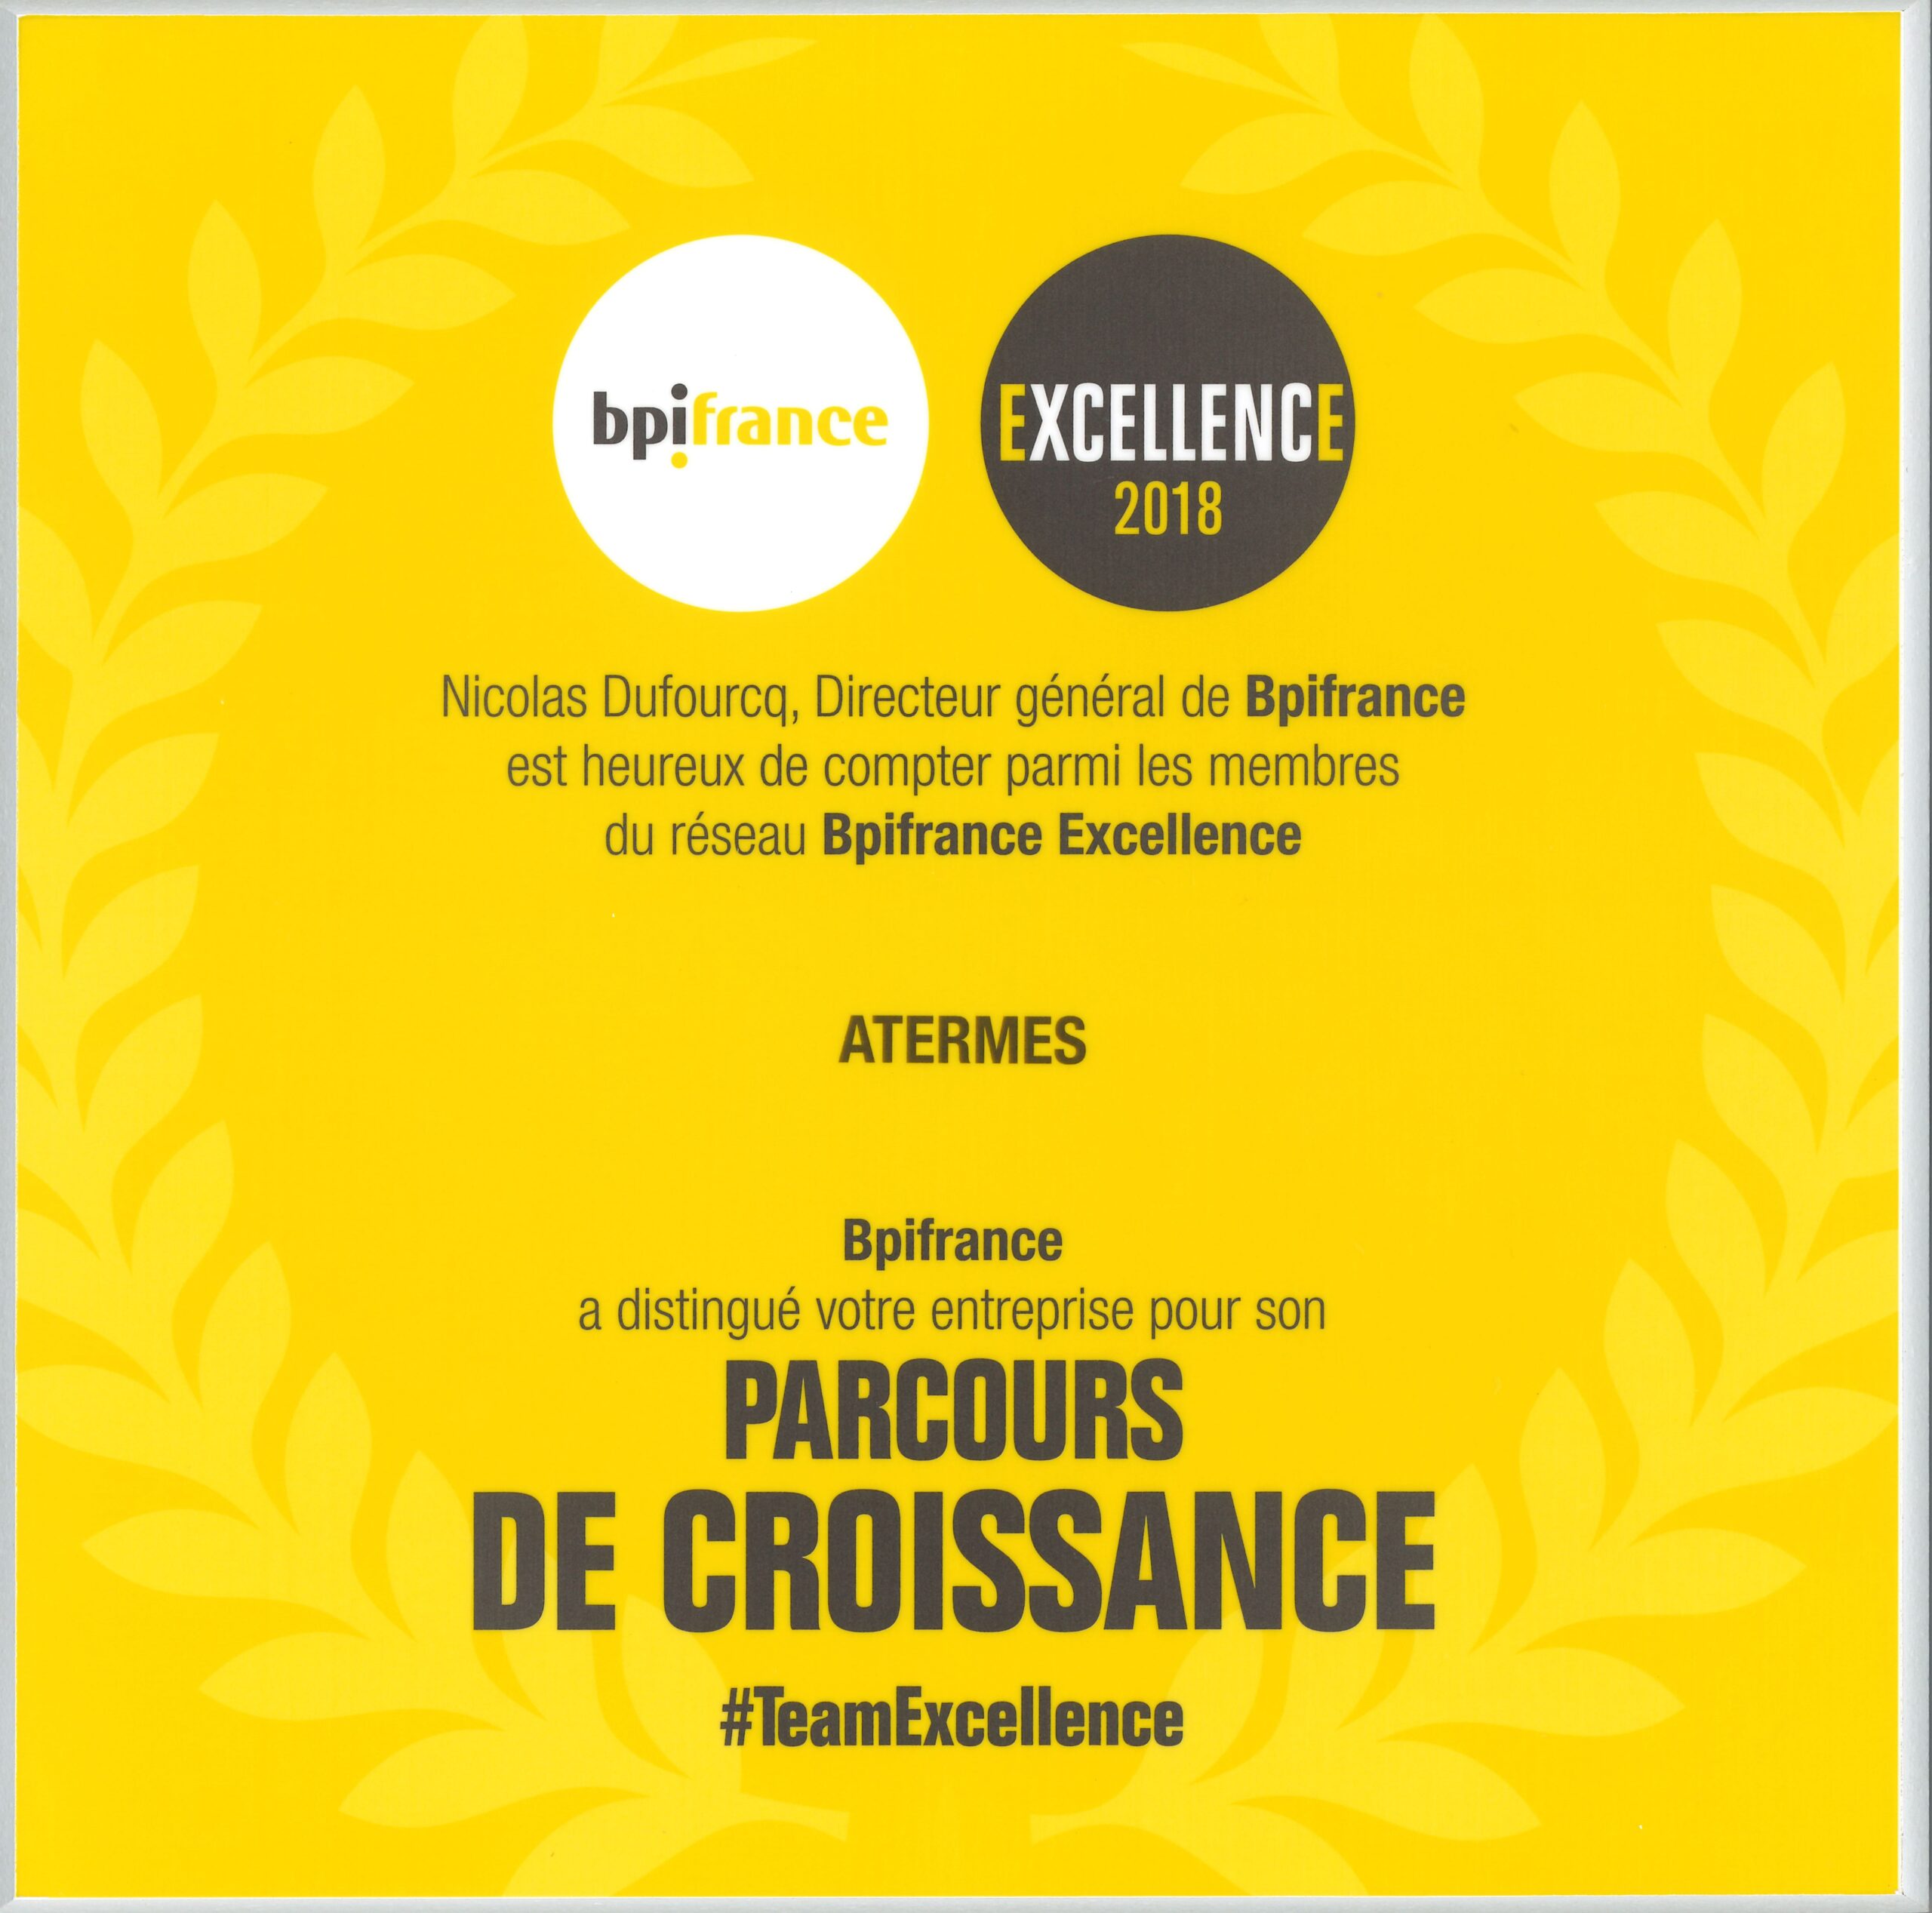 Excellence 2018 BPI France